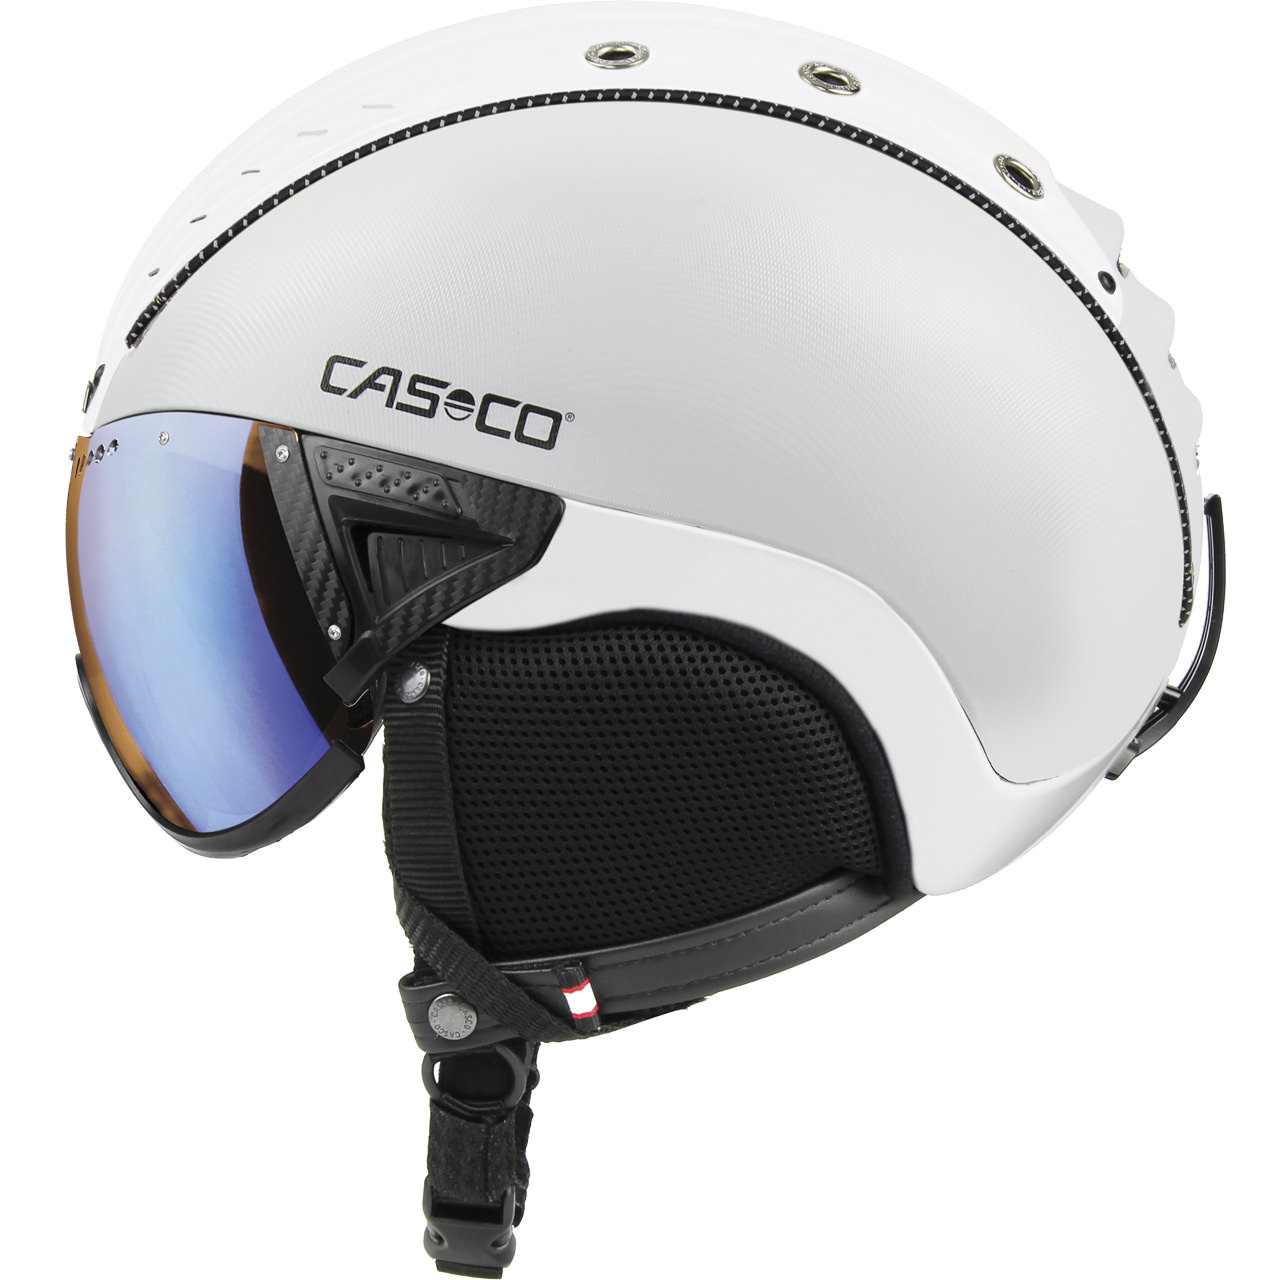 Casco SP-2 white - Visier Photomatic von Casco